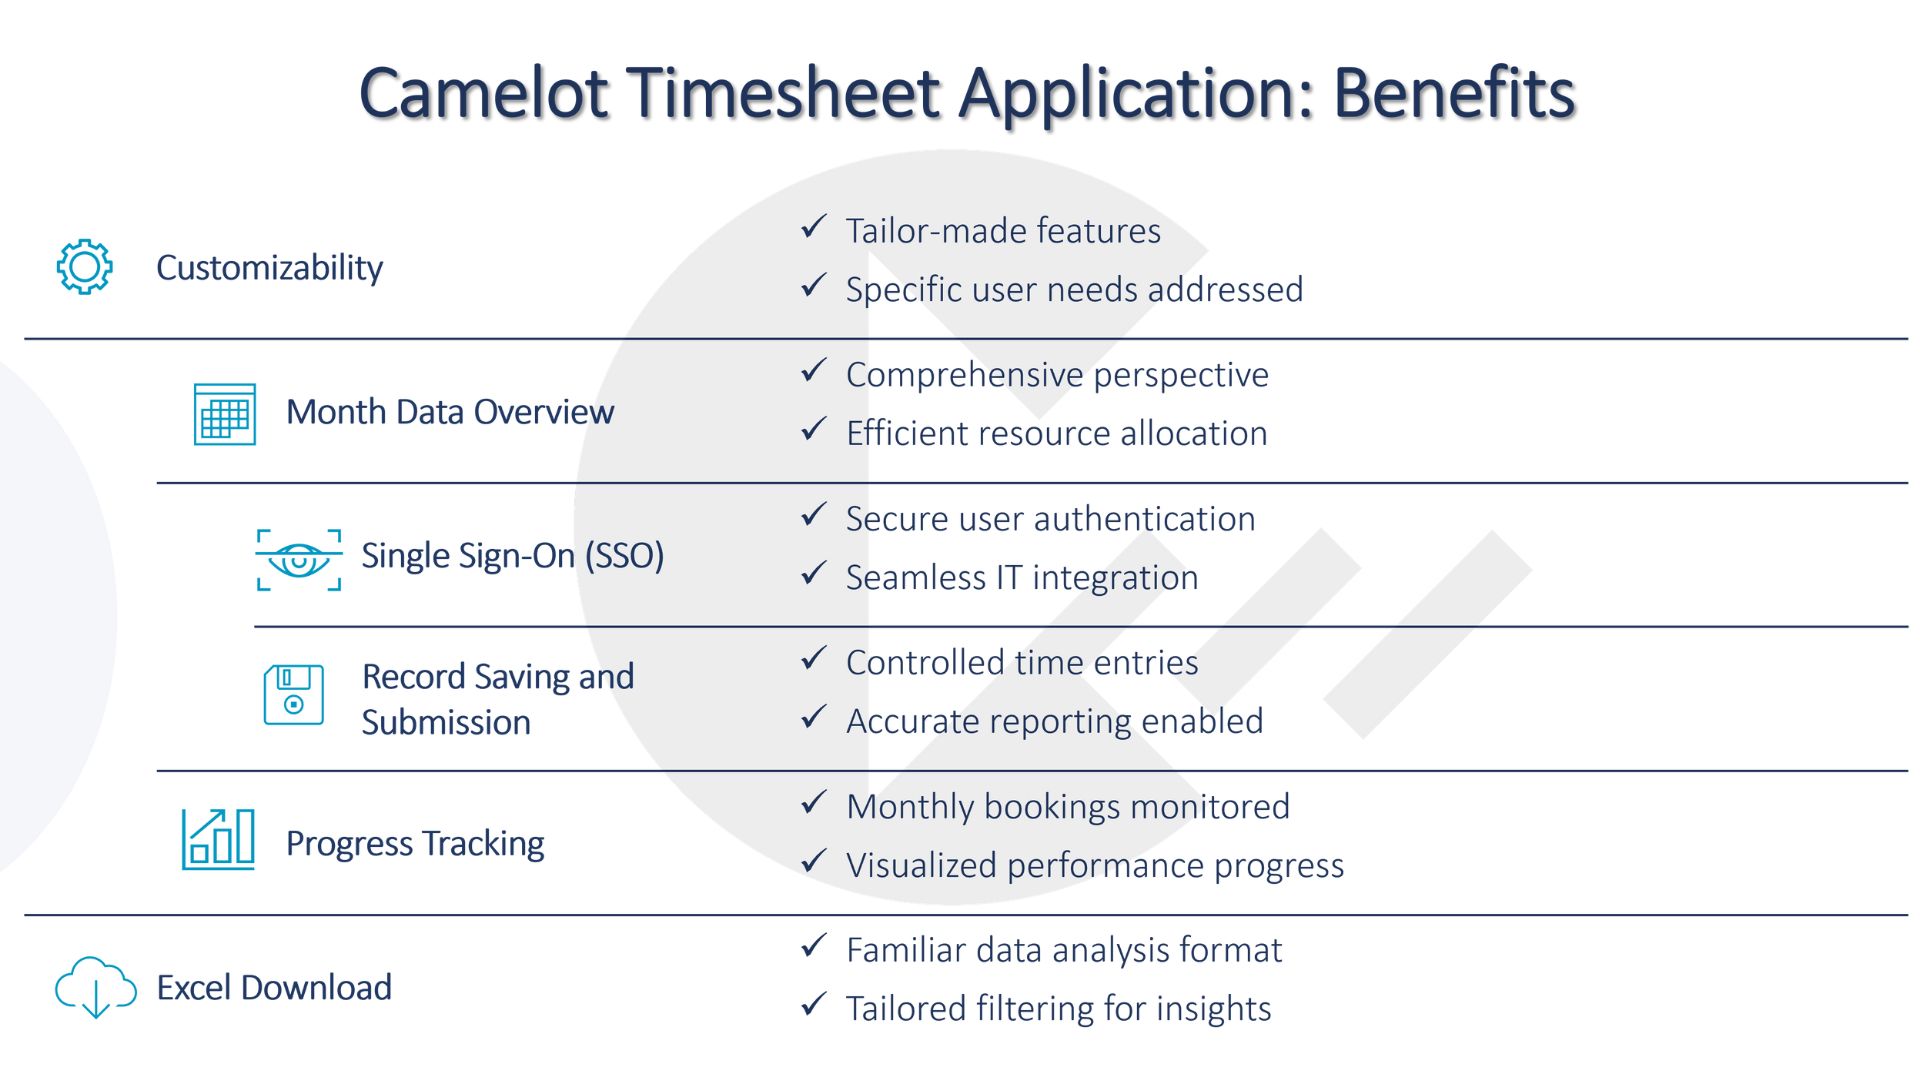 Benefits of Camelot Timesheet Application